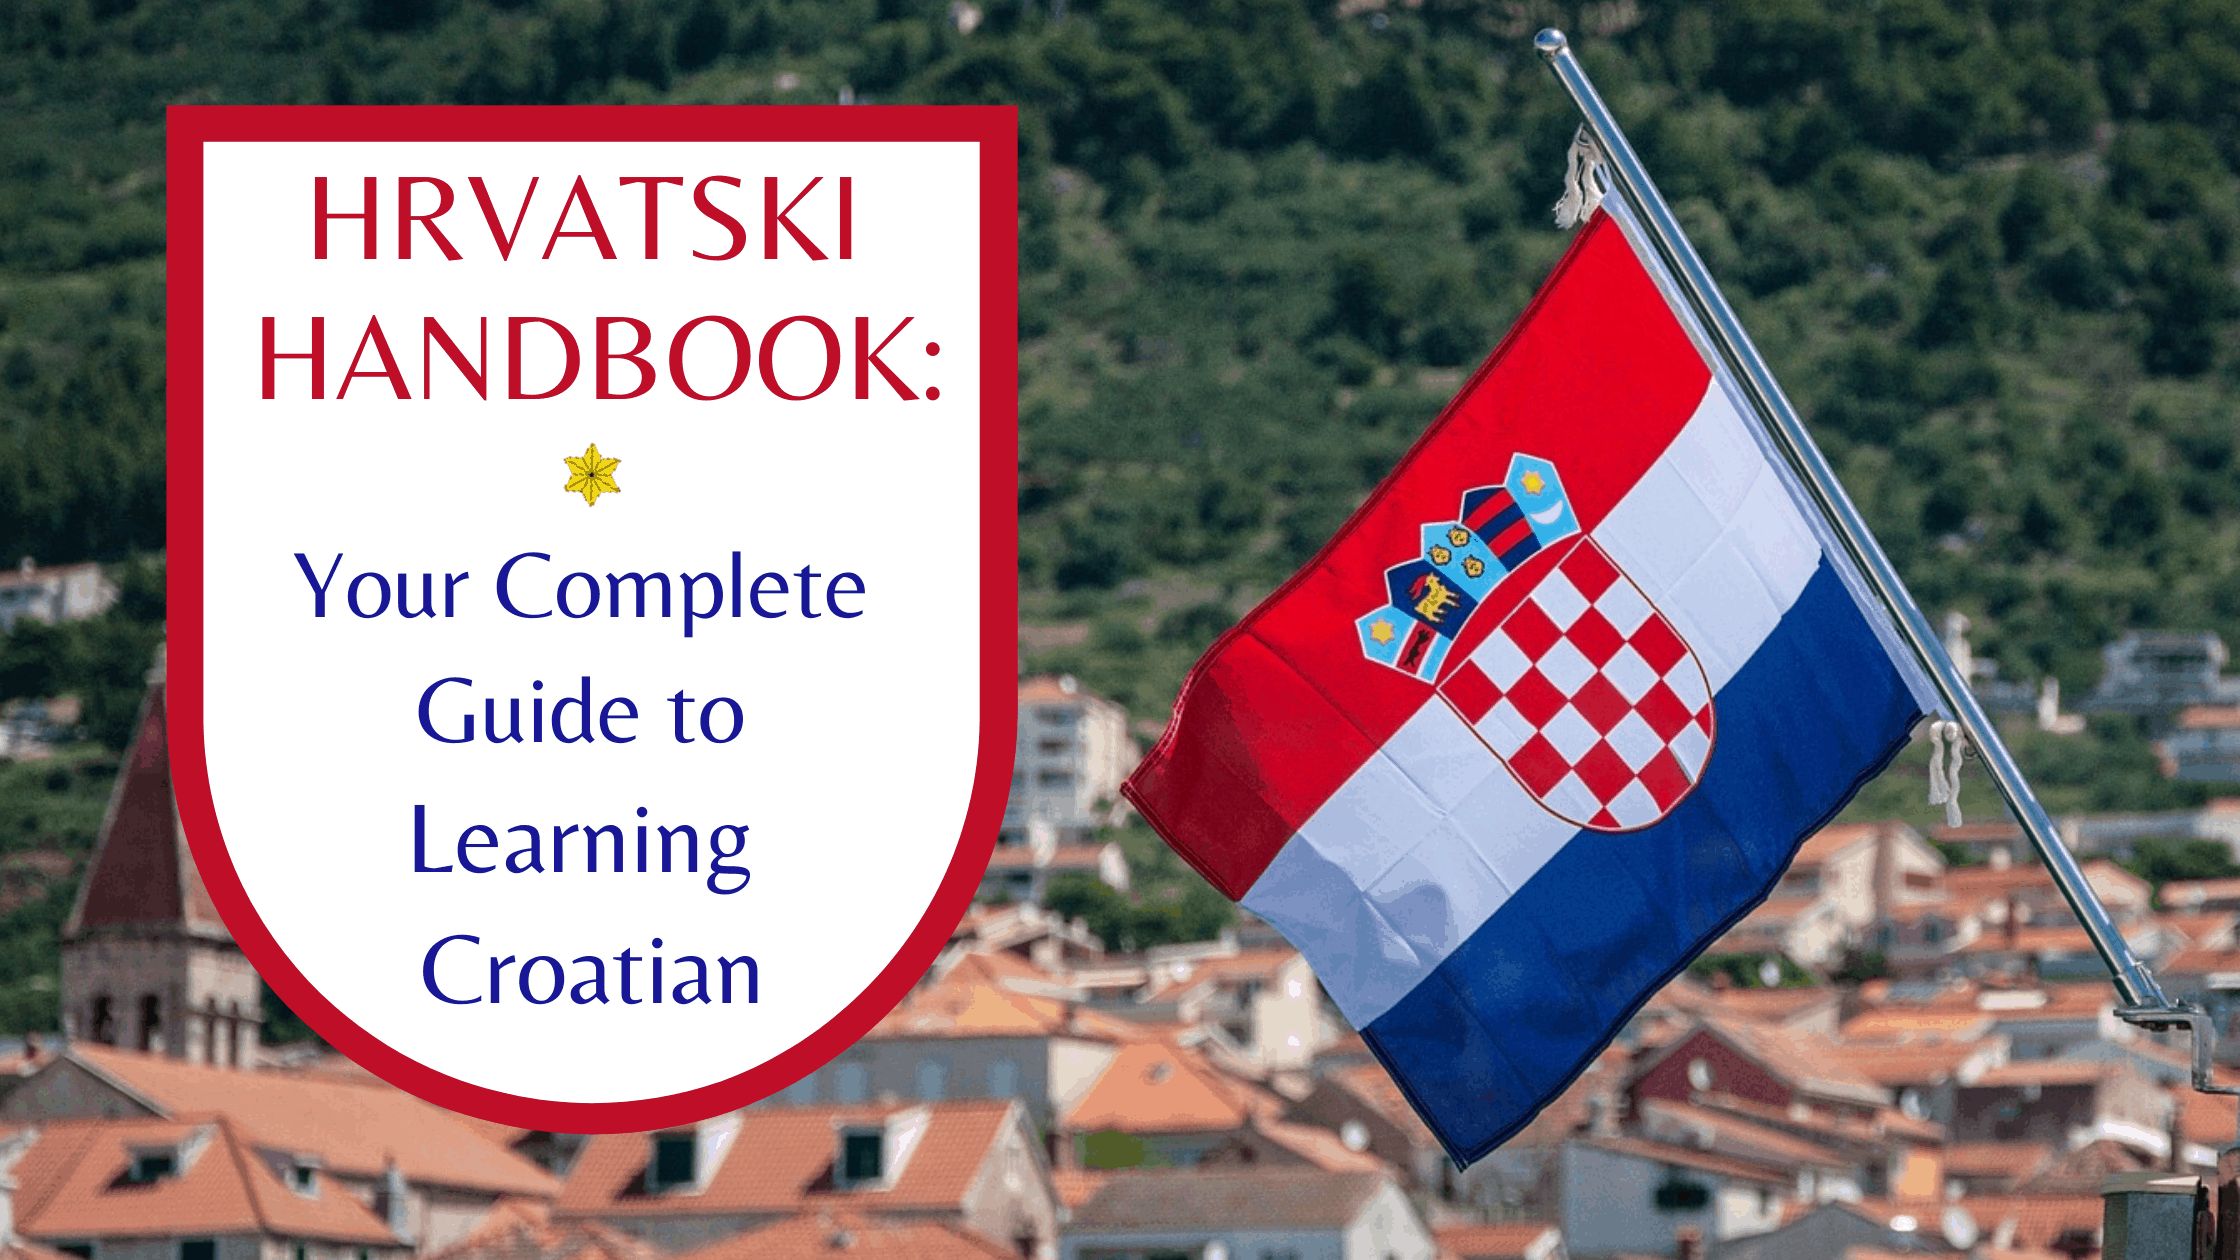 understanding croatia a collection of essays on croatian identity